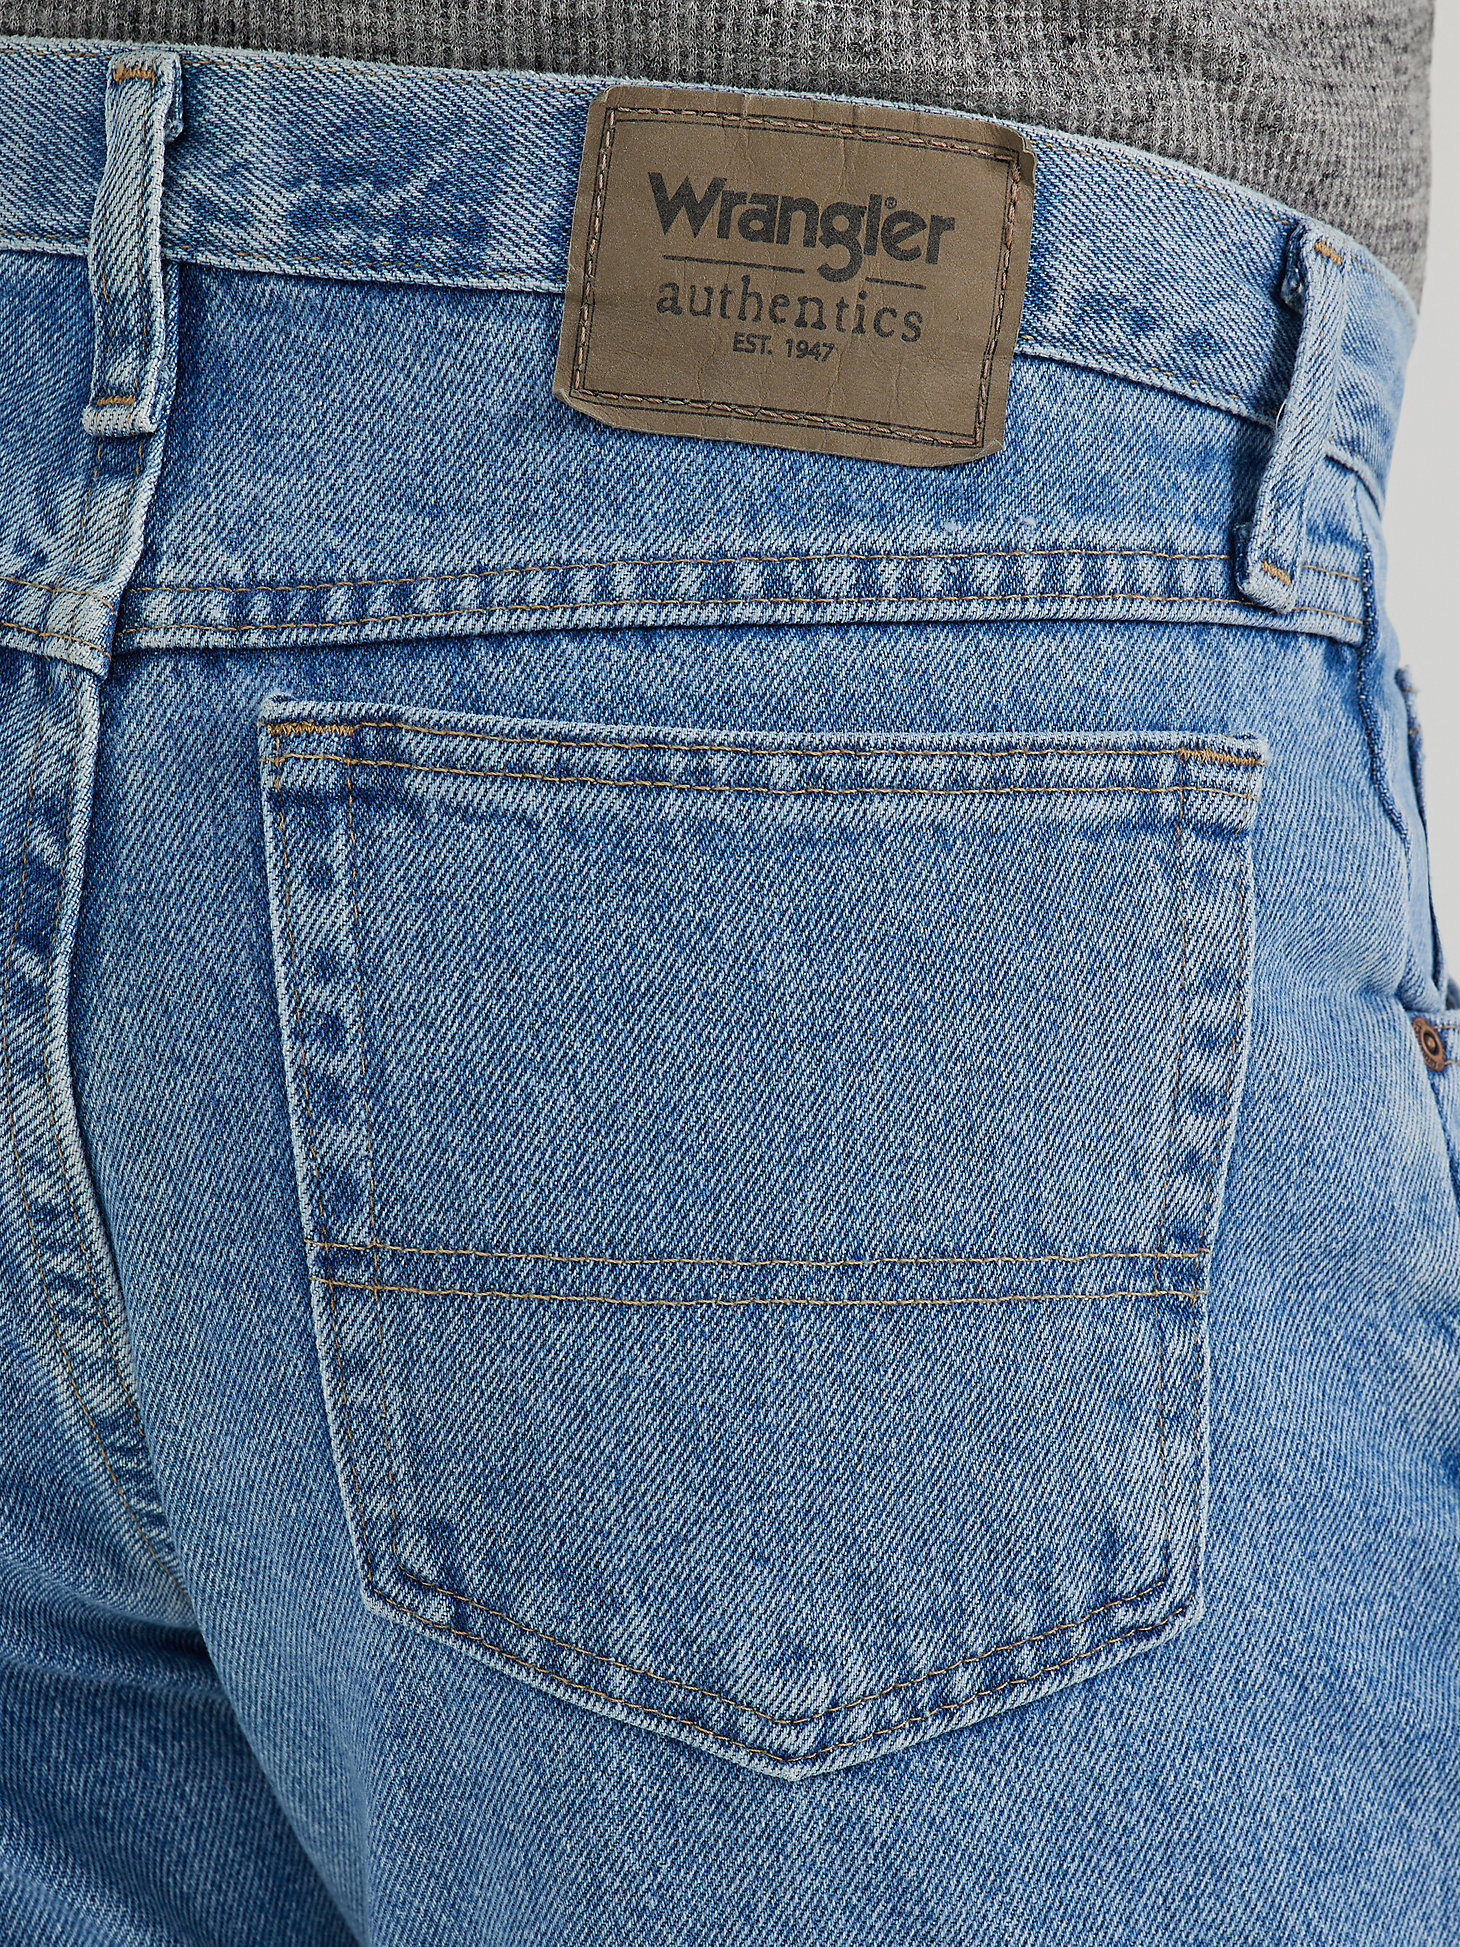 Men's Wrangler Authentics® Regular Fit Cotton Jean in Light Stonewash